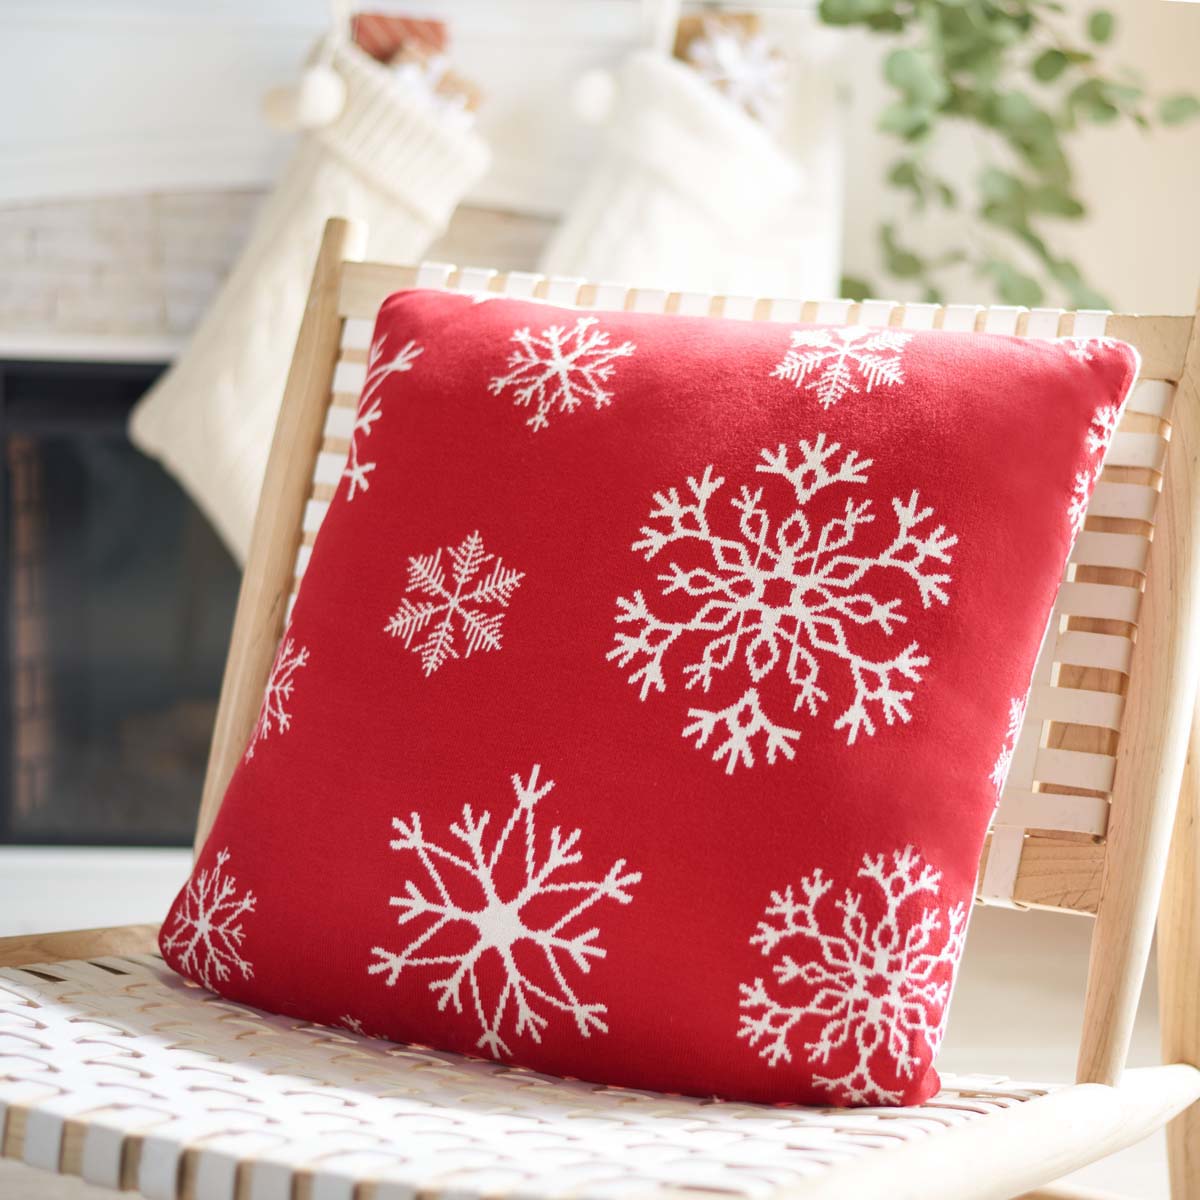 Safavieh Snow Flake Pillow , HOL3003